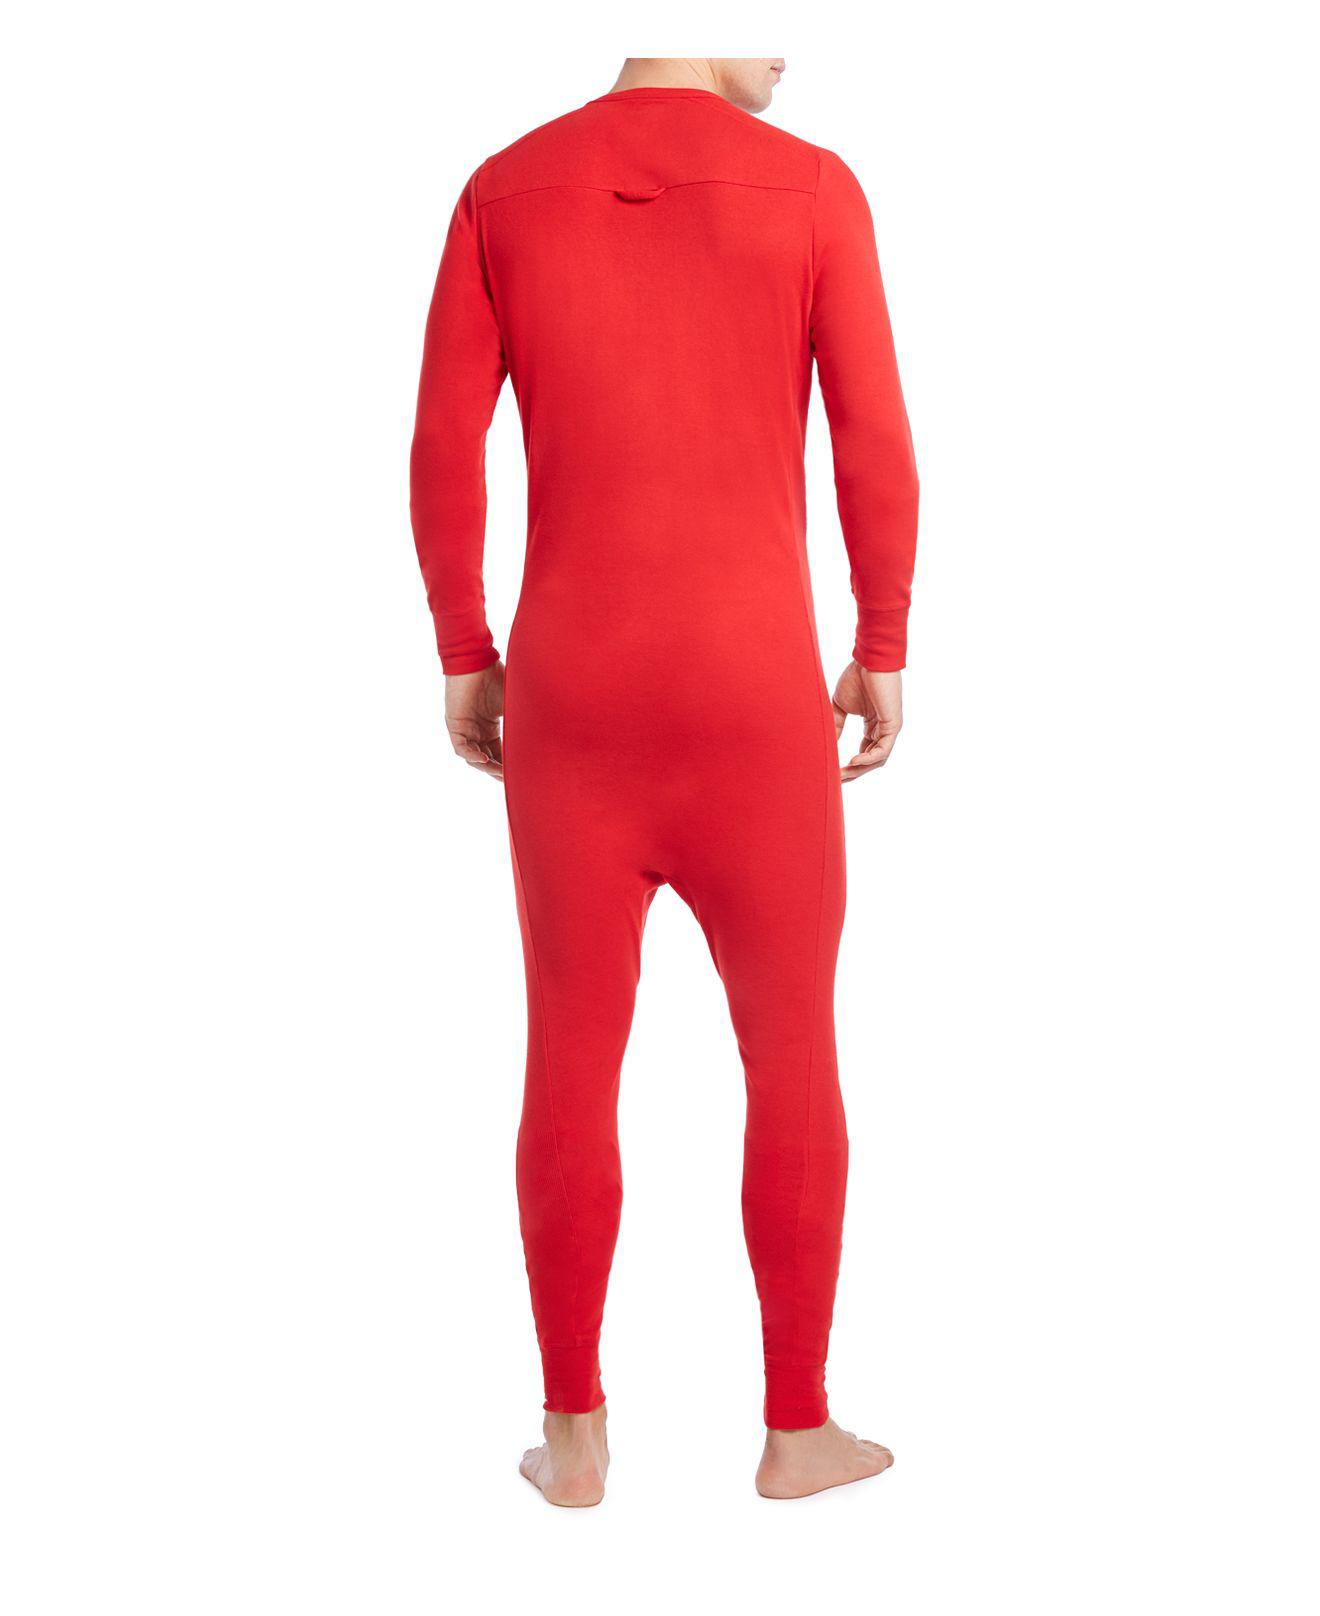 2xist Long John Onesie Union Suit in Red for Men - Lyst